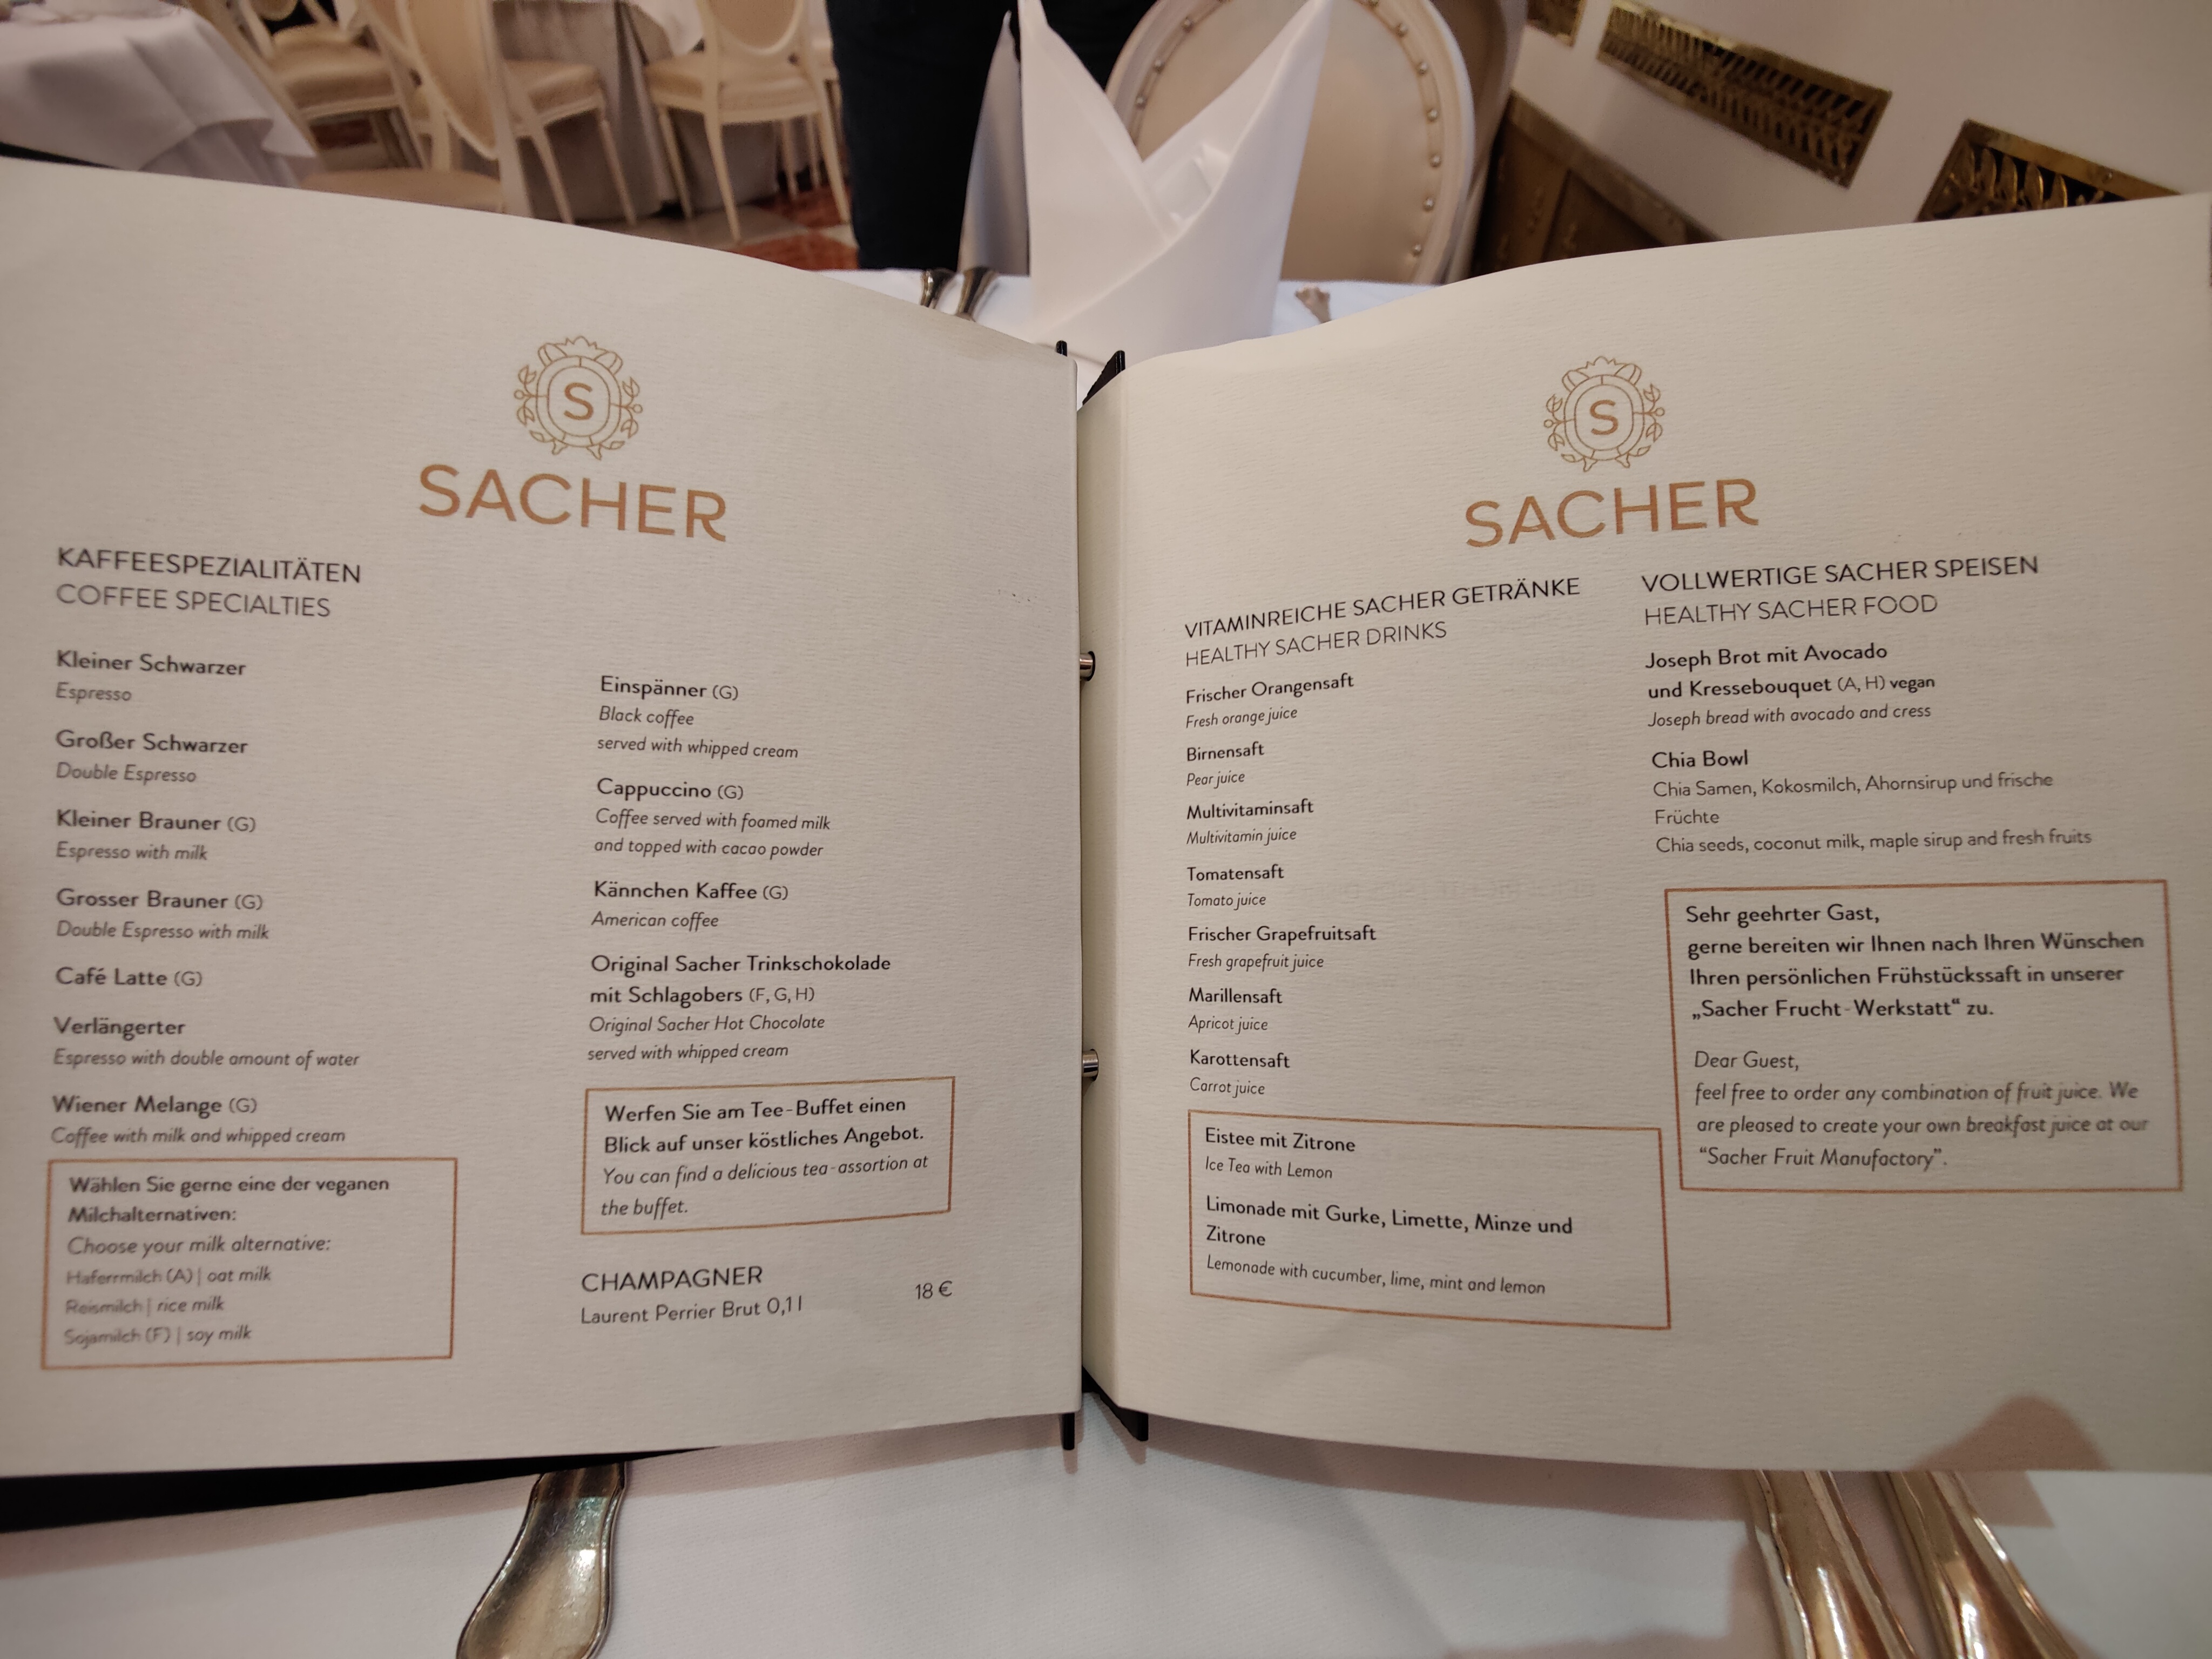 Hotel Sacher Wien - Vienna - a MICHELIN Guide Hotel